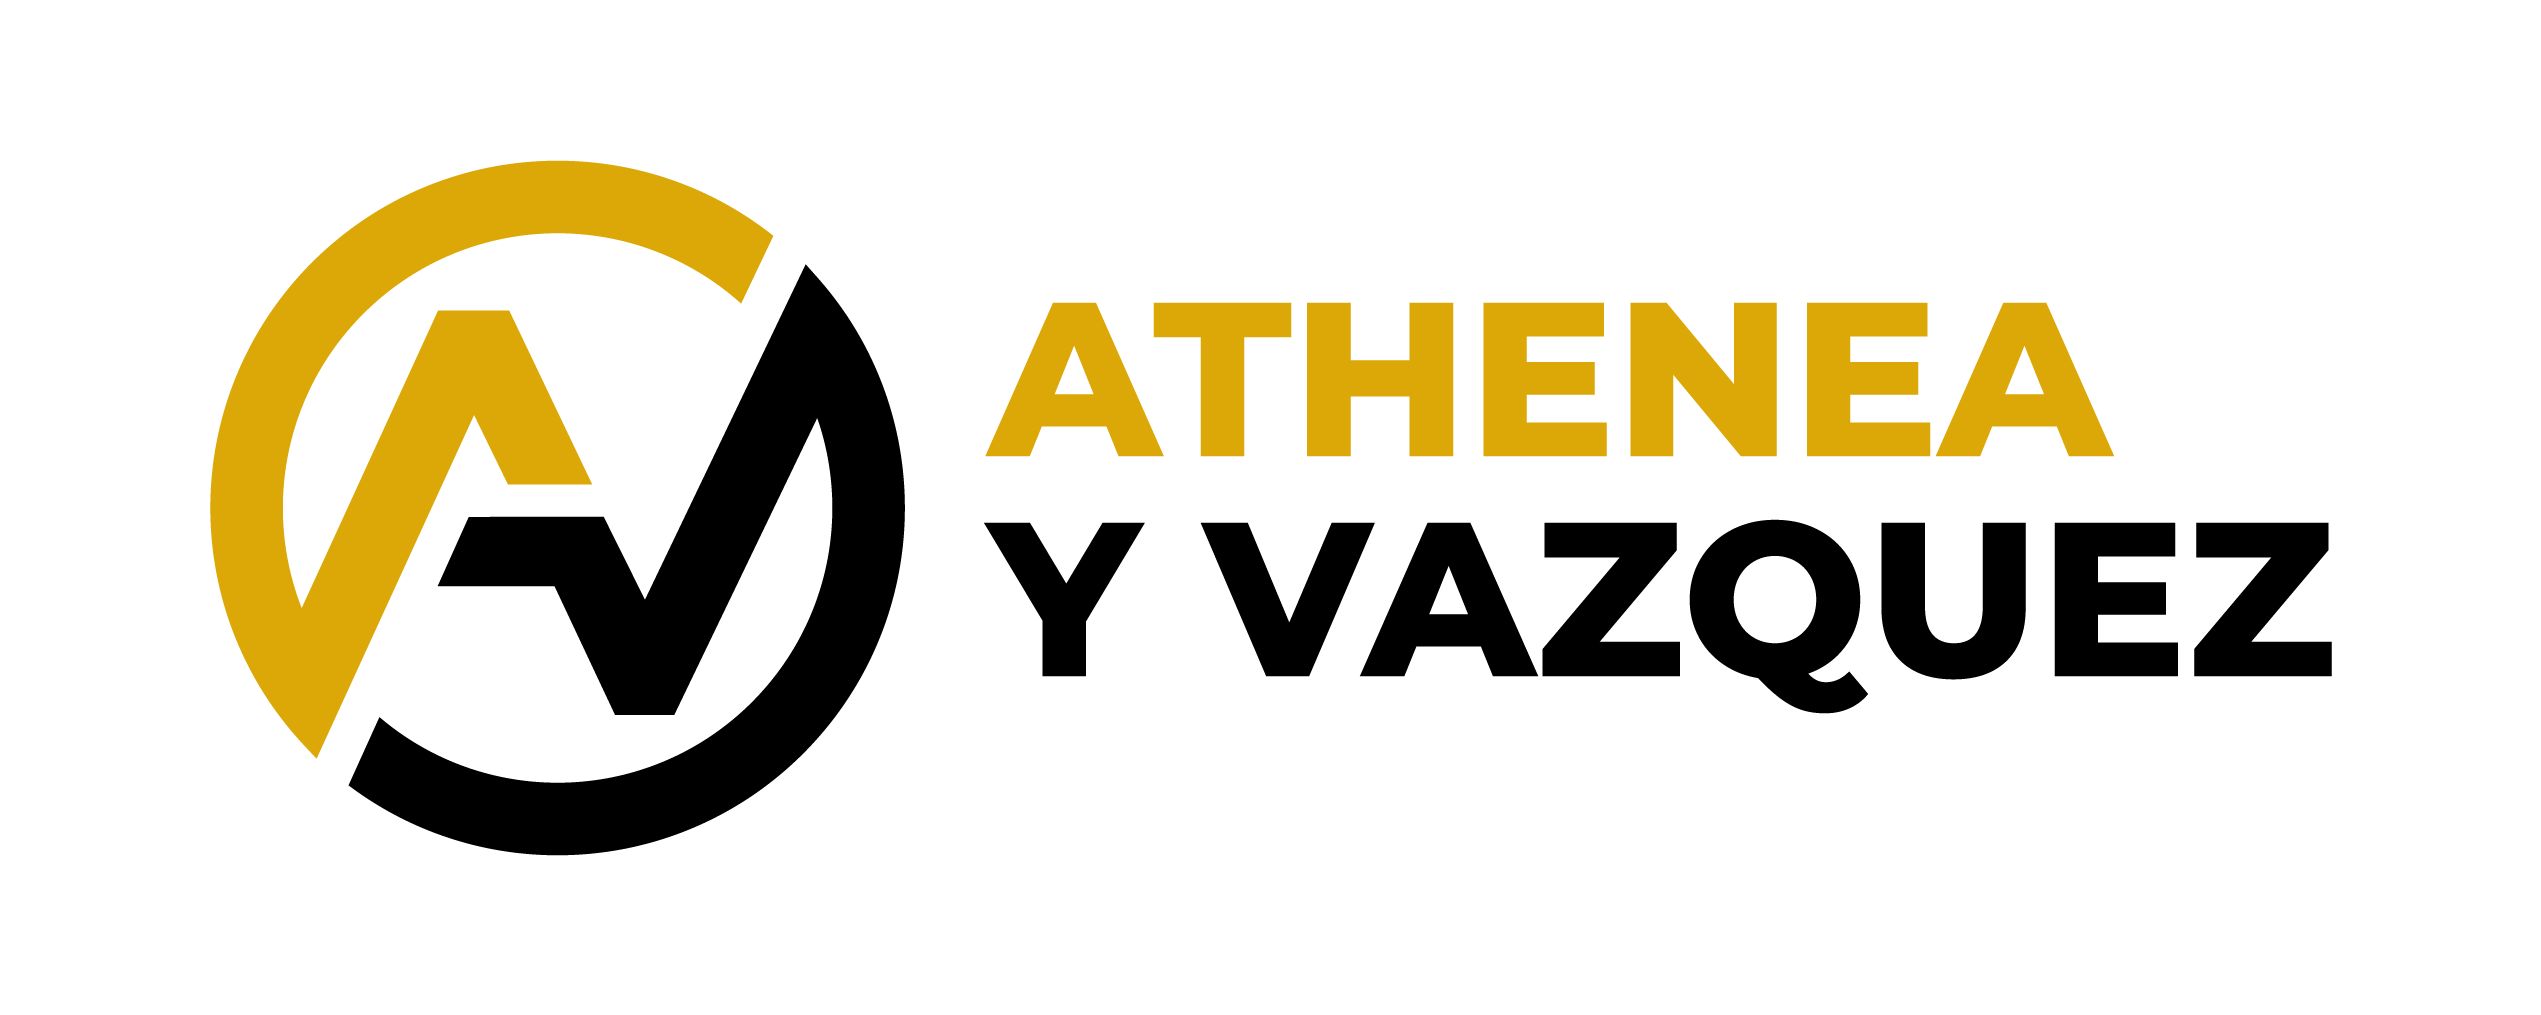 Athenea y Vazquez